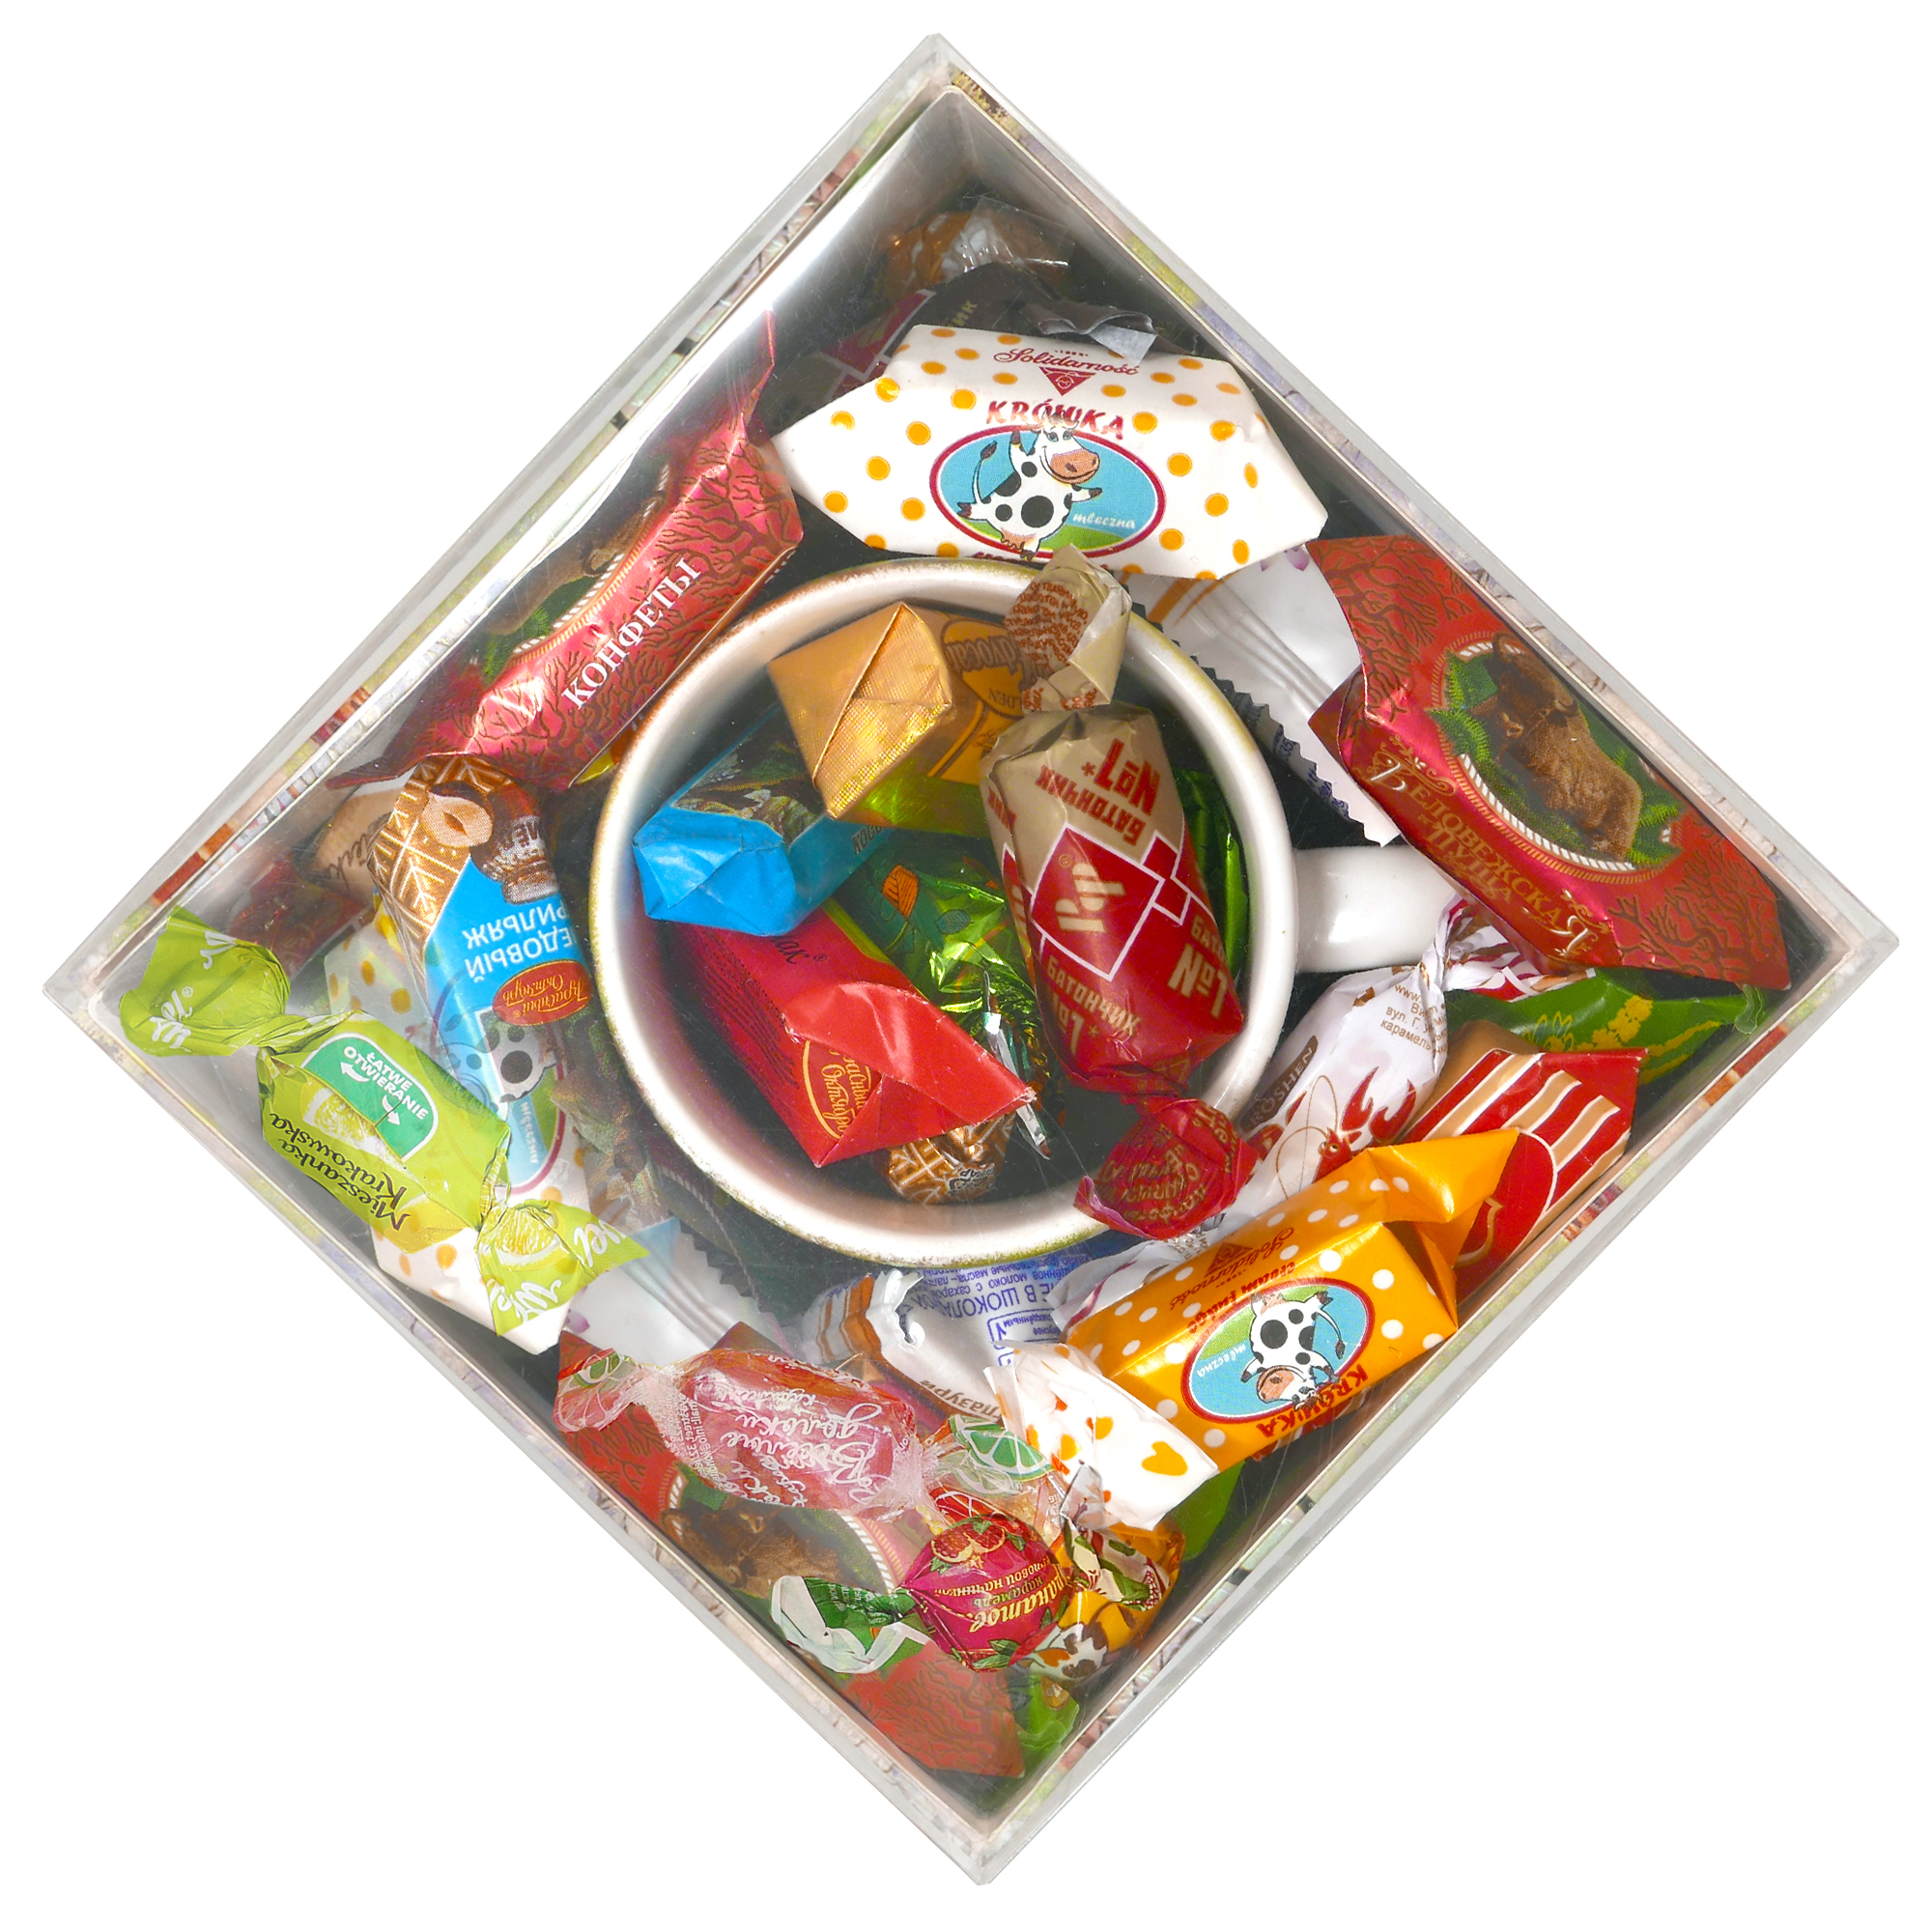 Gift Set in Festive Box Candy Mix 1lb+Mug Red Scarf Matryoshka 